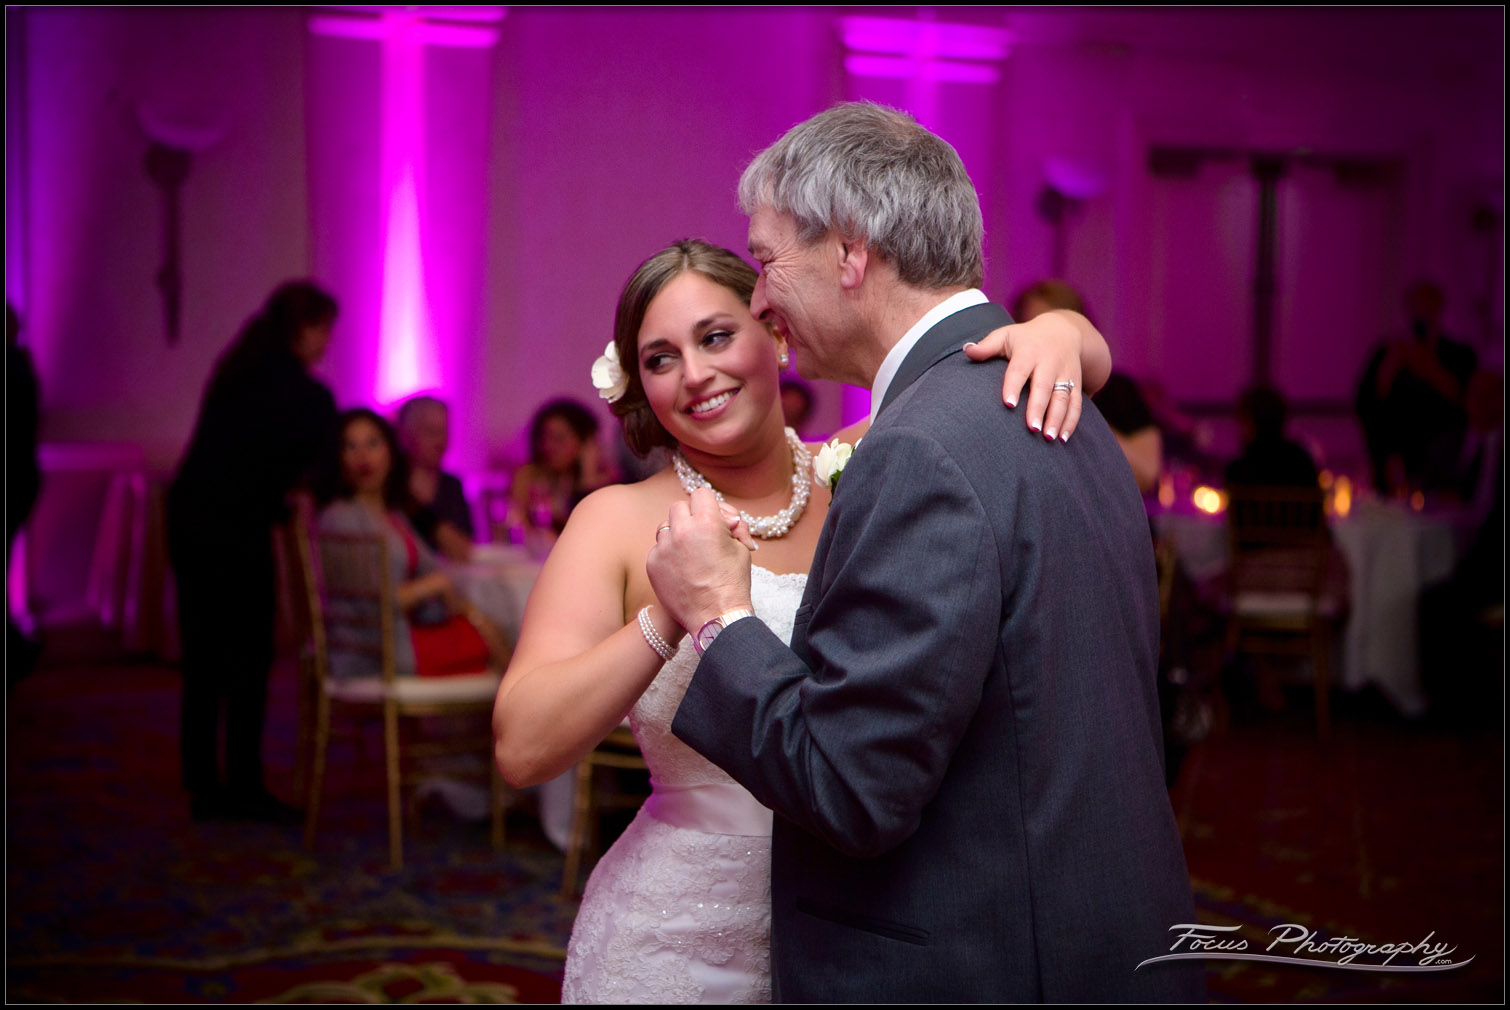 Bride enjoys her dance with dad